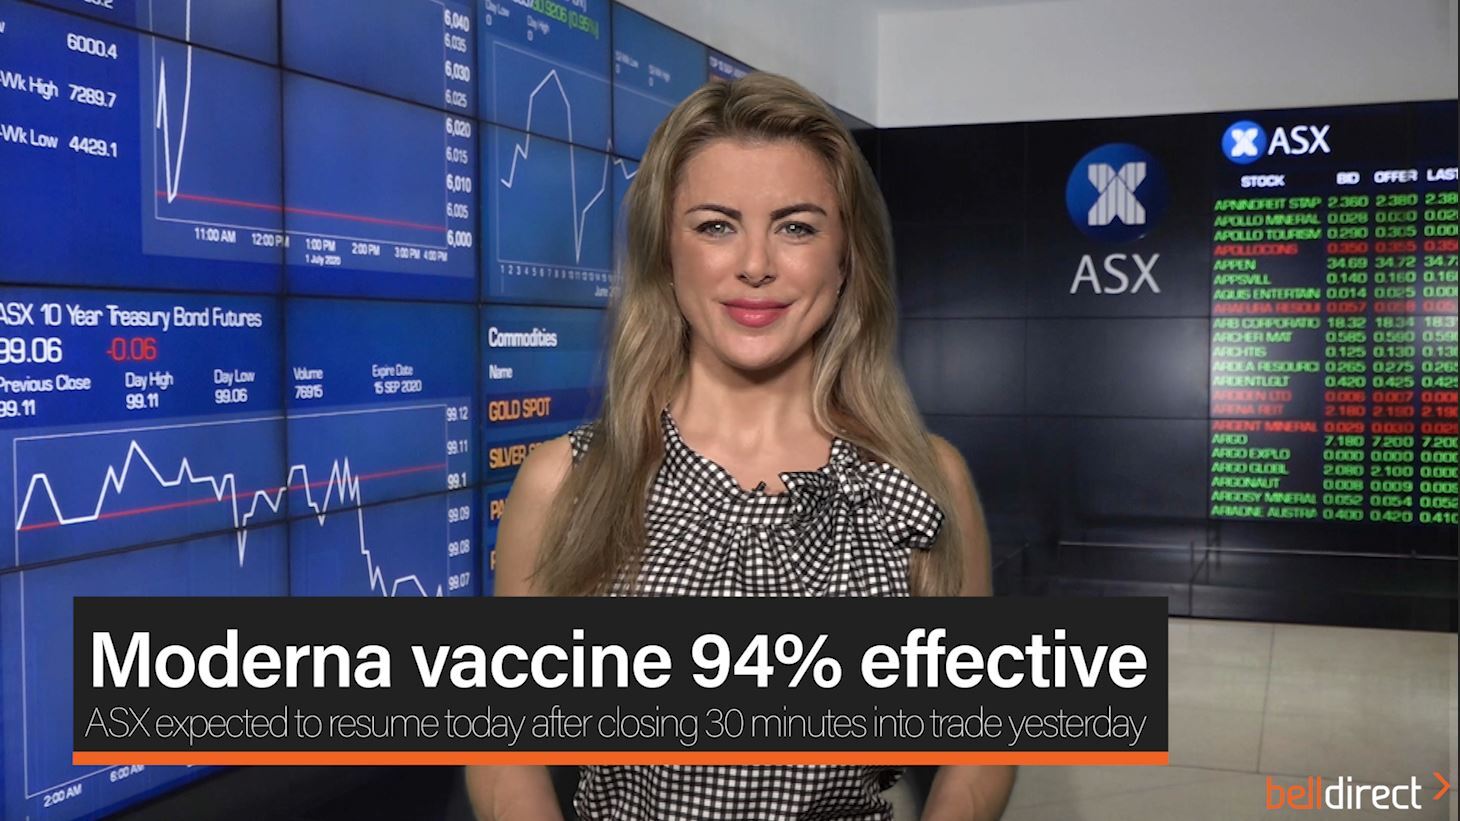 Moderna COVID-19 vaccine 94% effective